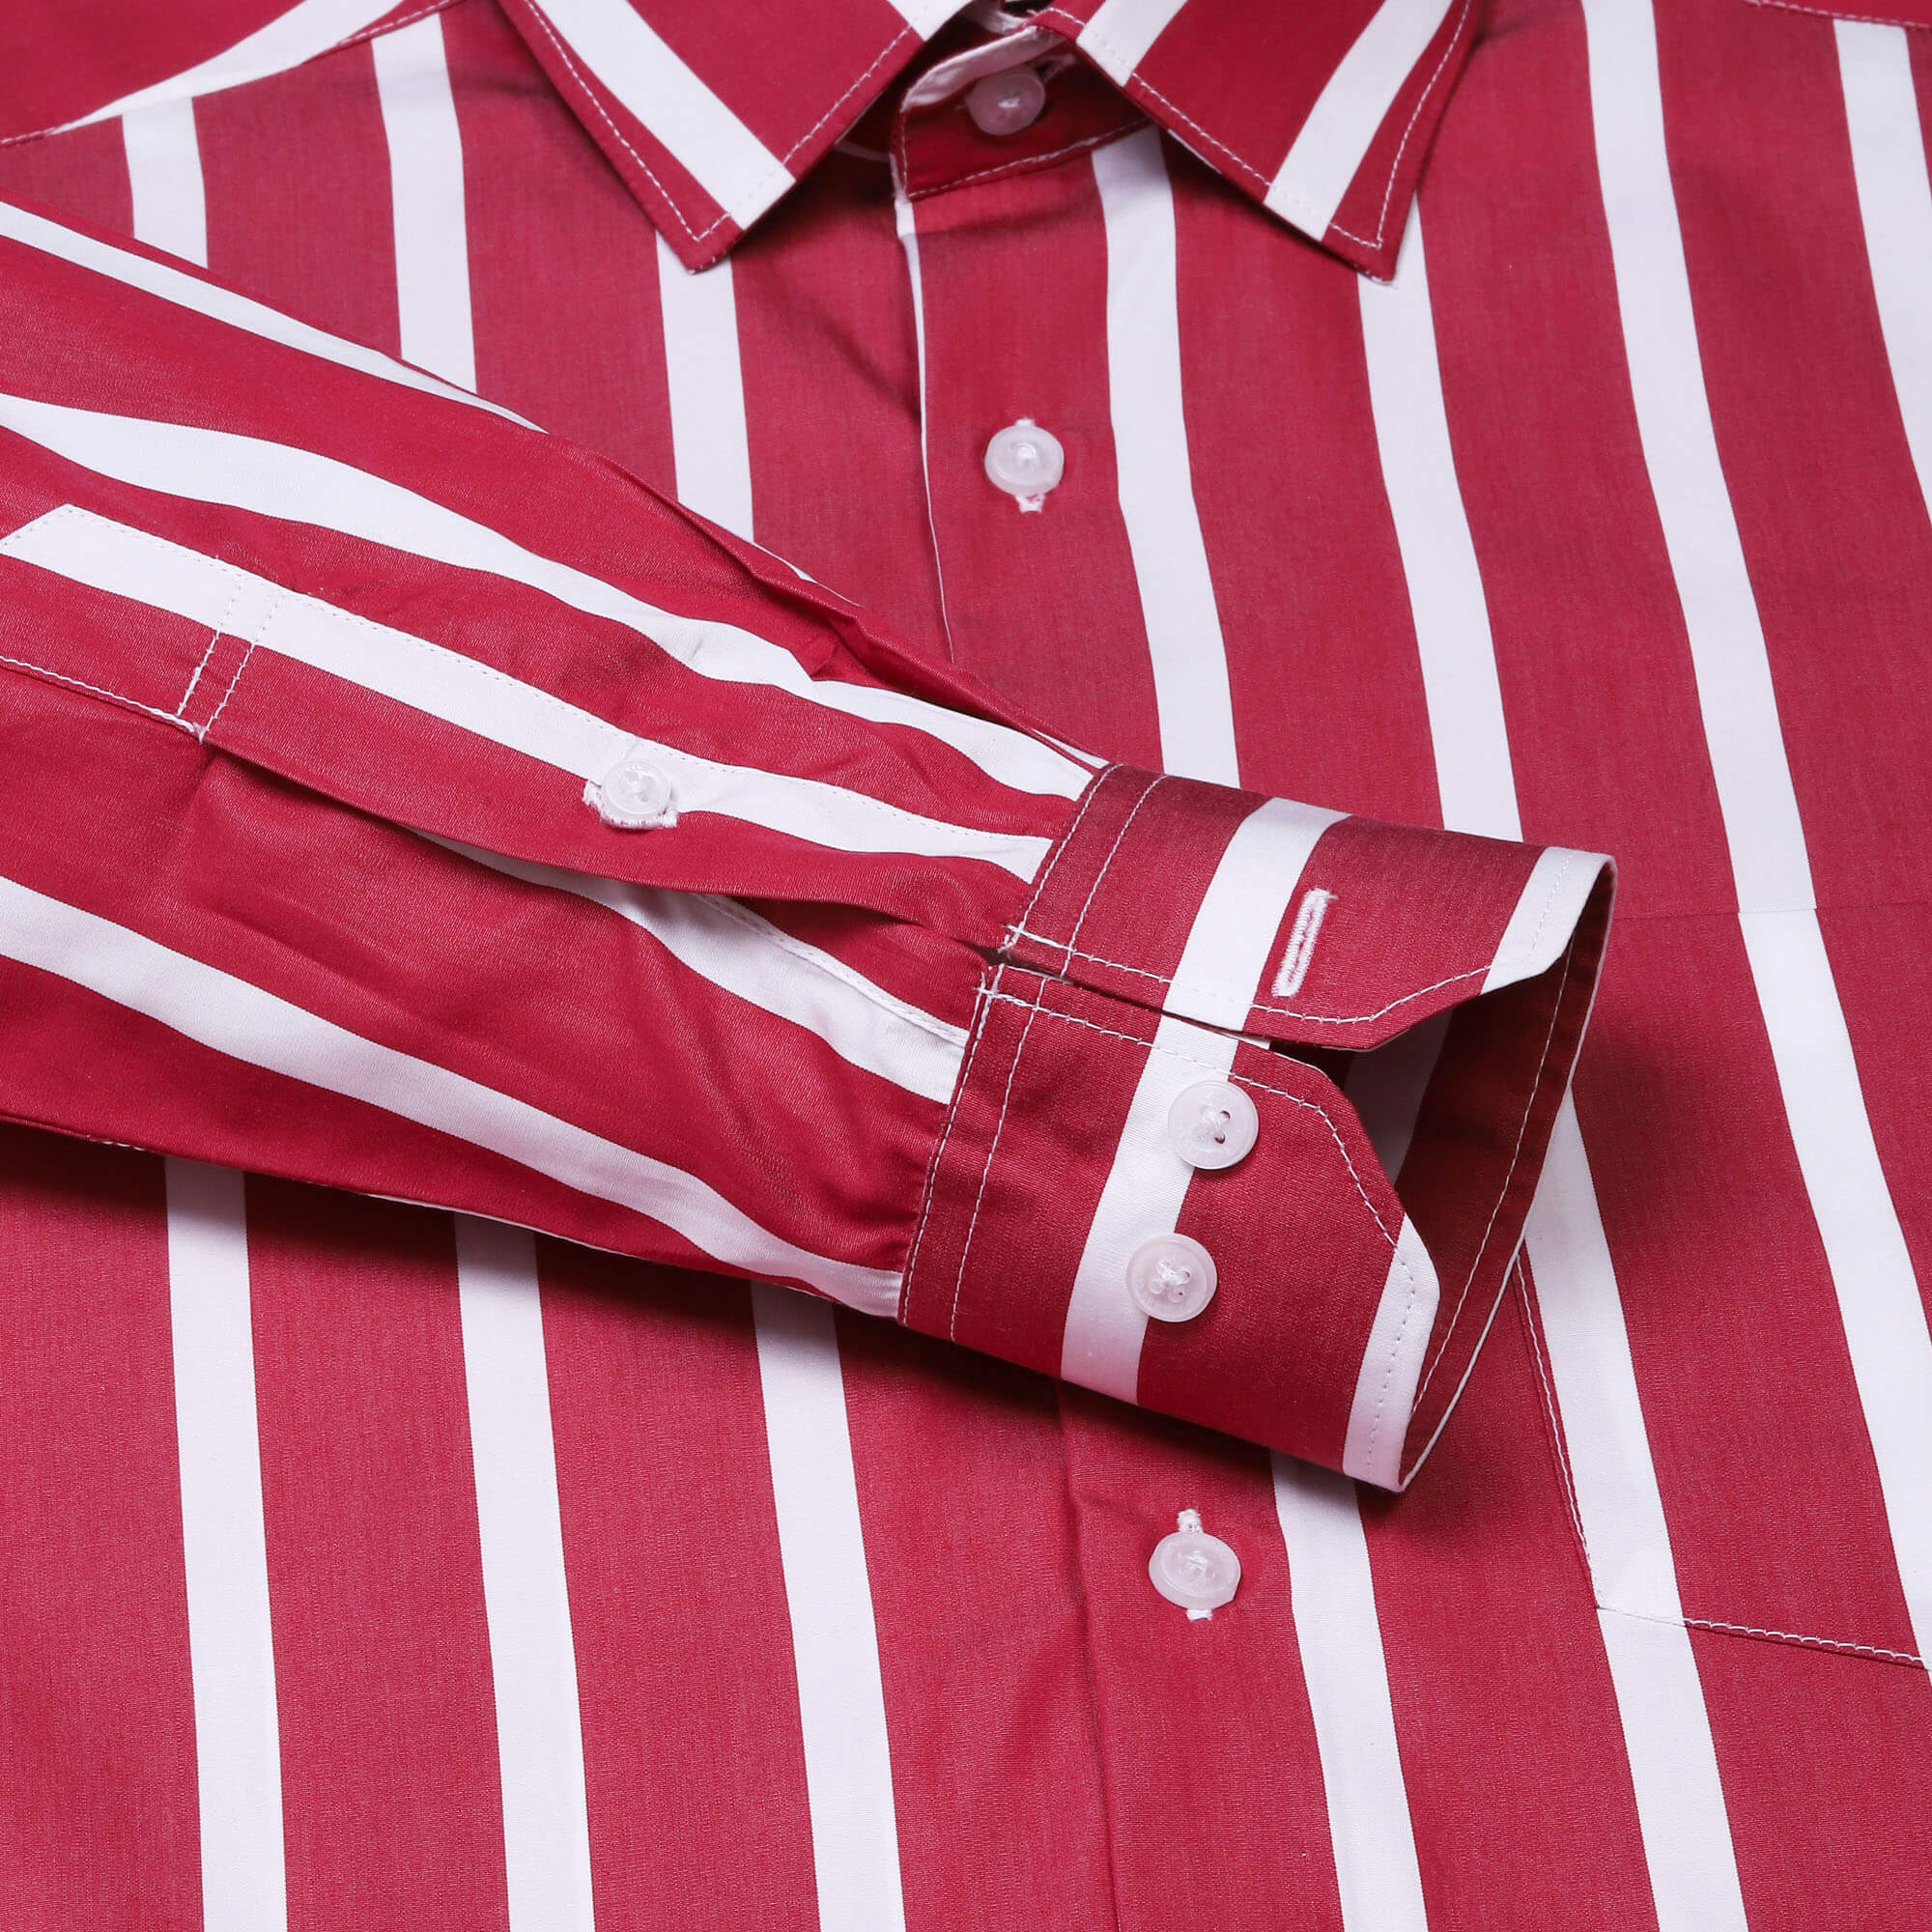 Zephyr Stripe Shirt In Red Regular Fit - The Formal Club